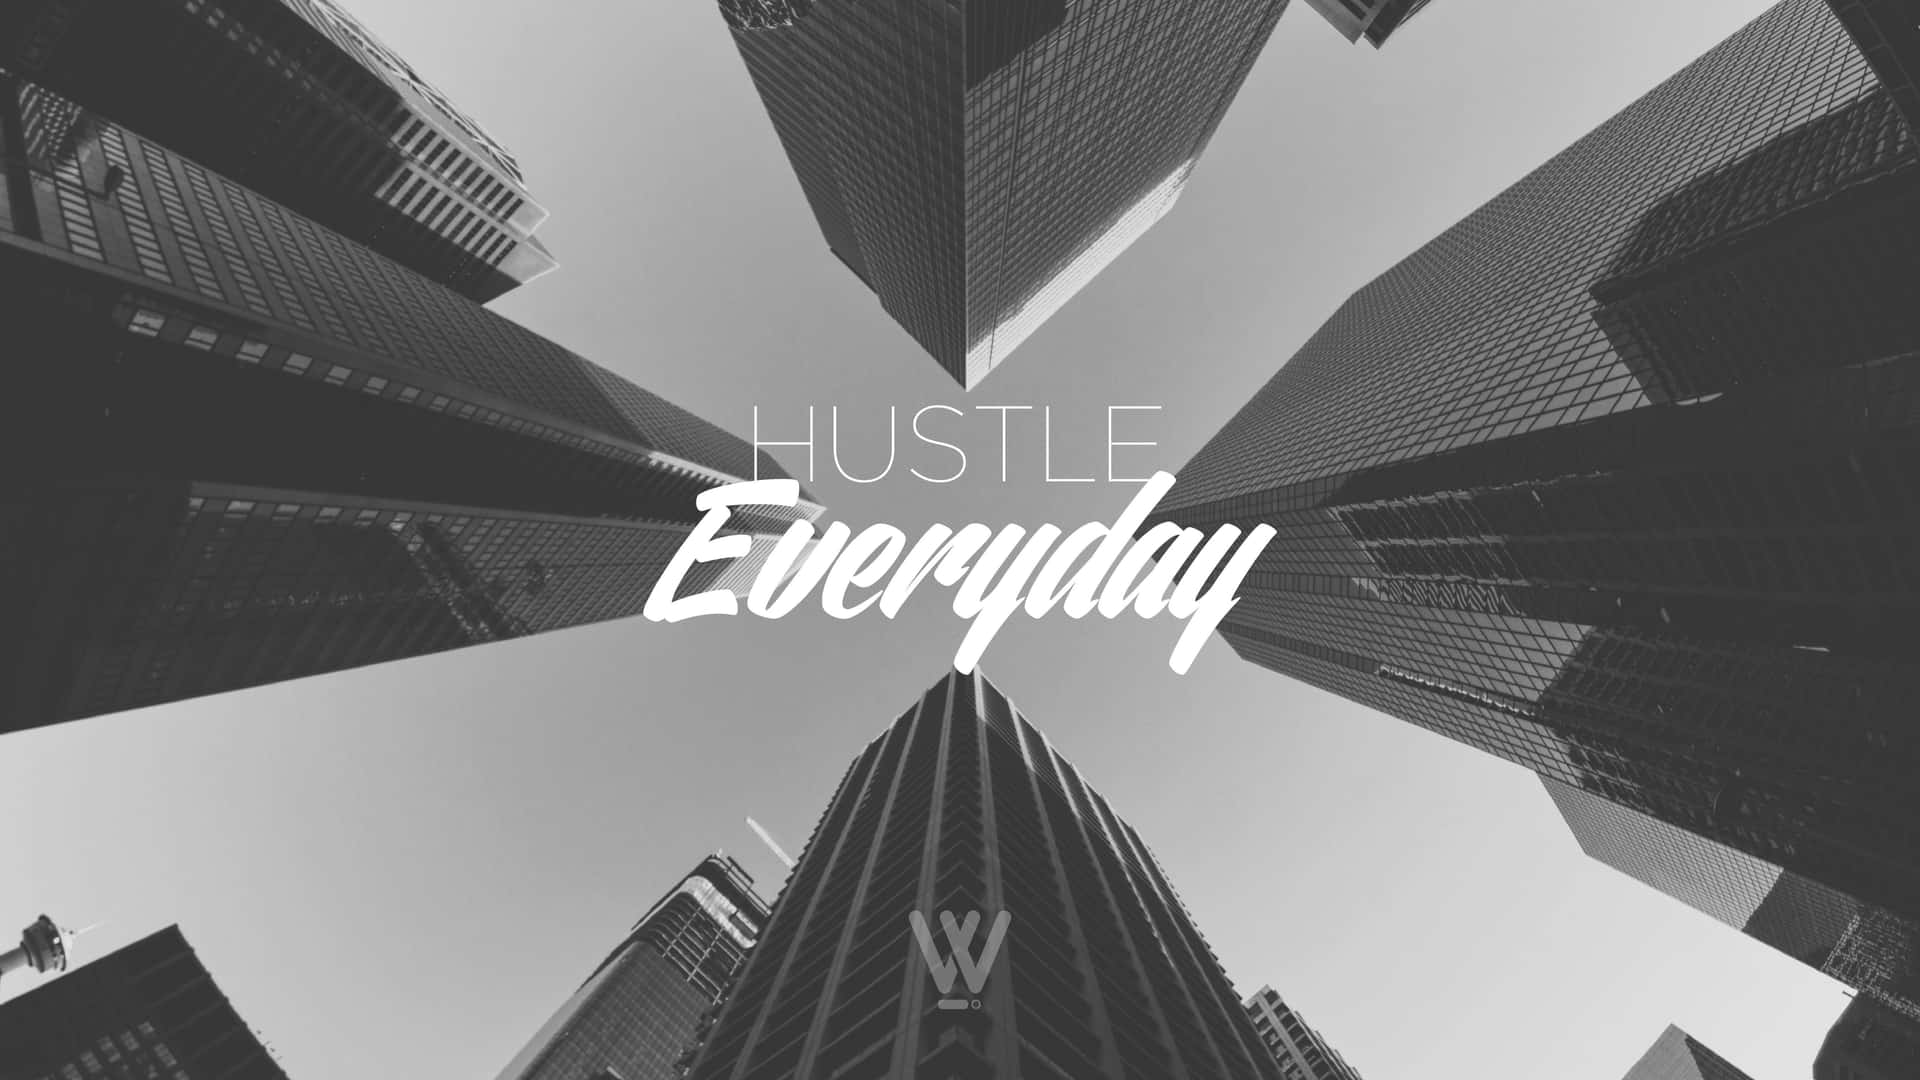 Hustle Everyday - W - Ad Wallpaper